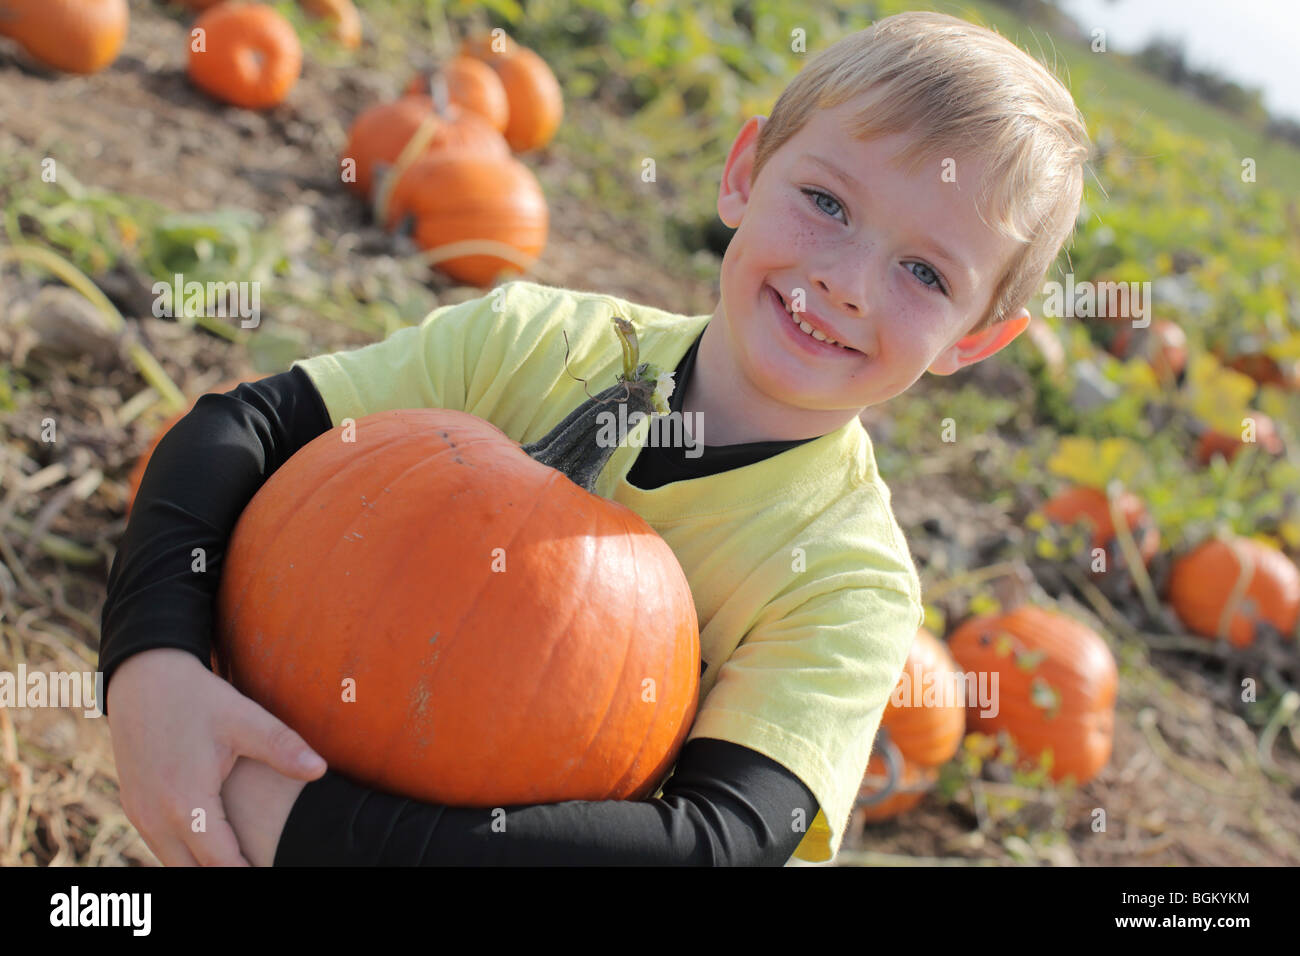 Young boy holding up pumpkin at pumpkin patch Stock Photo